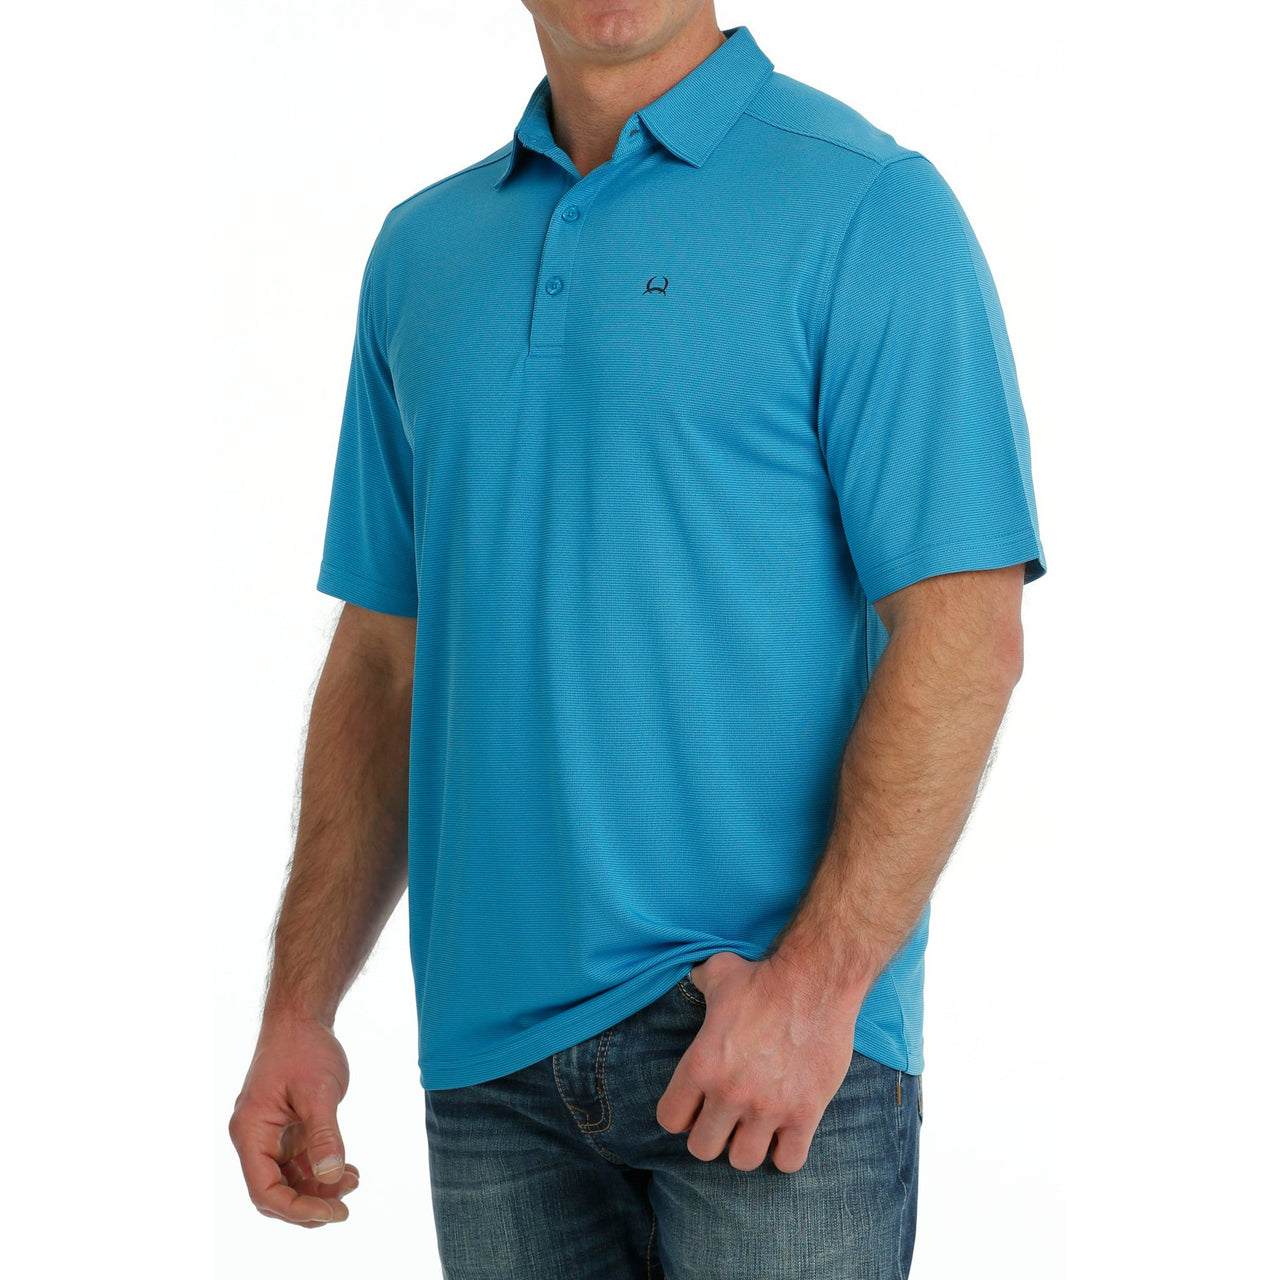 Cinch Men's Arenaflex Polo Shirt - Blue